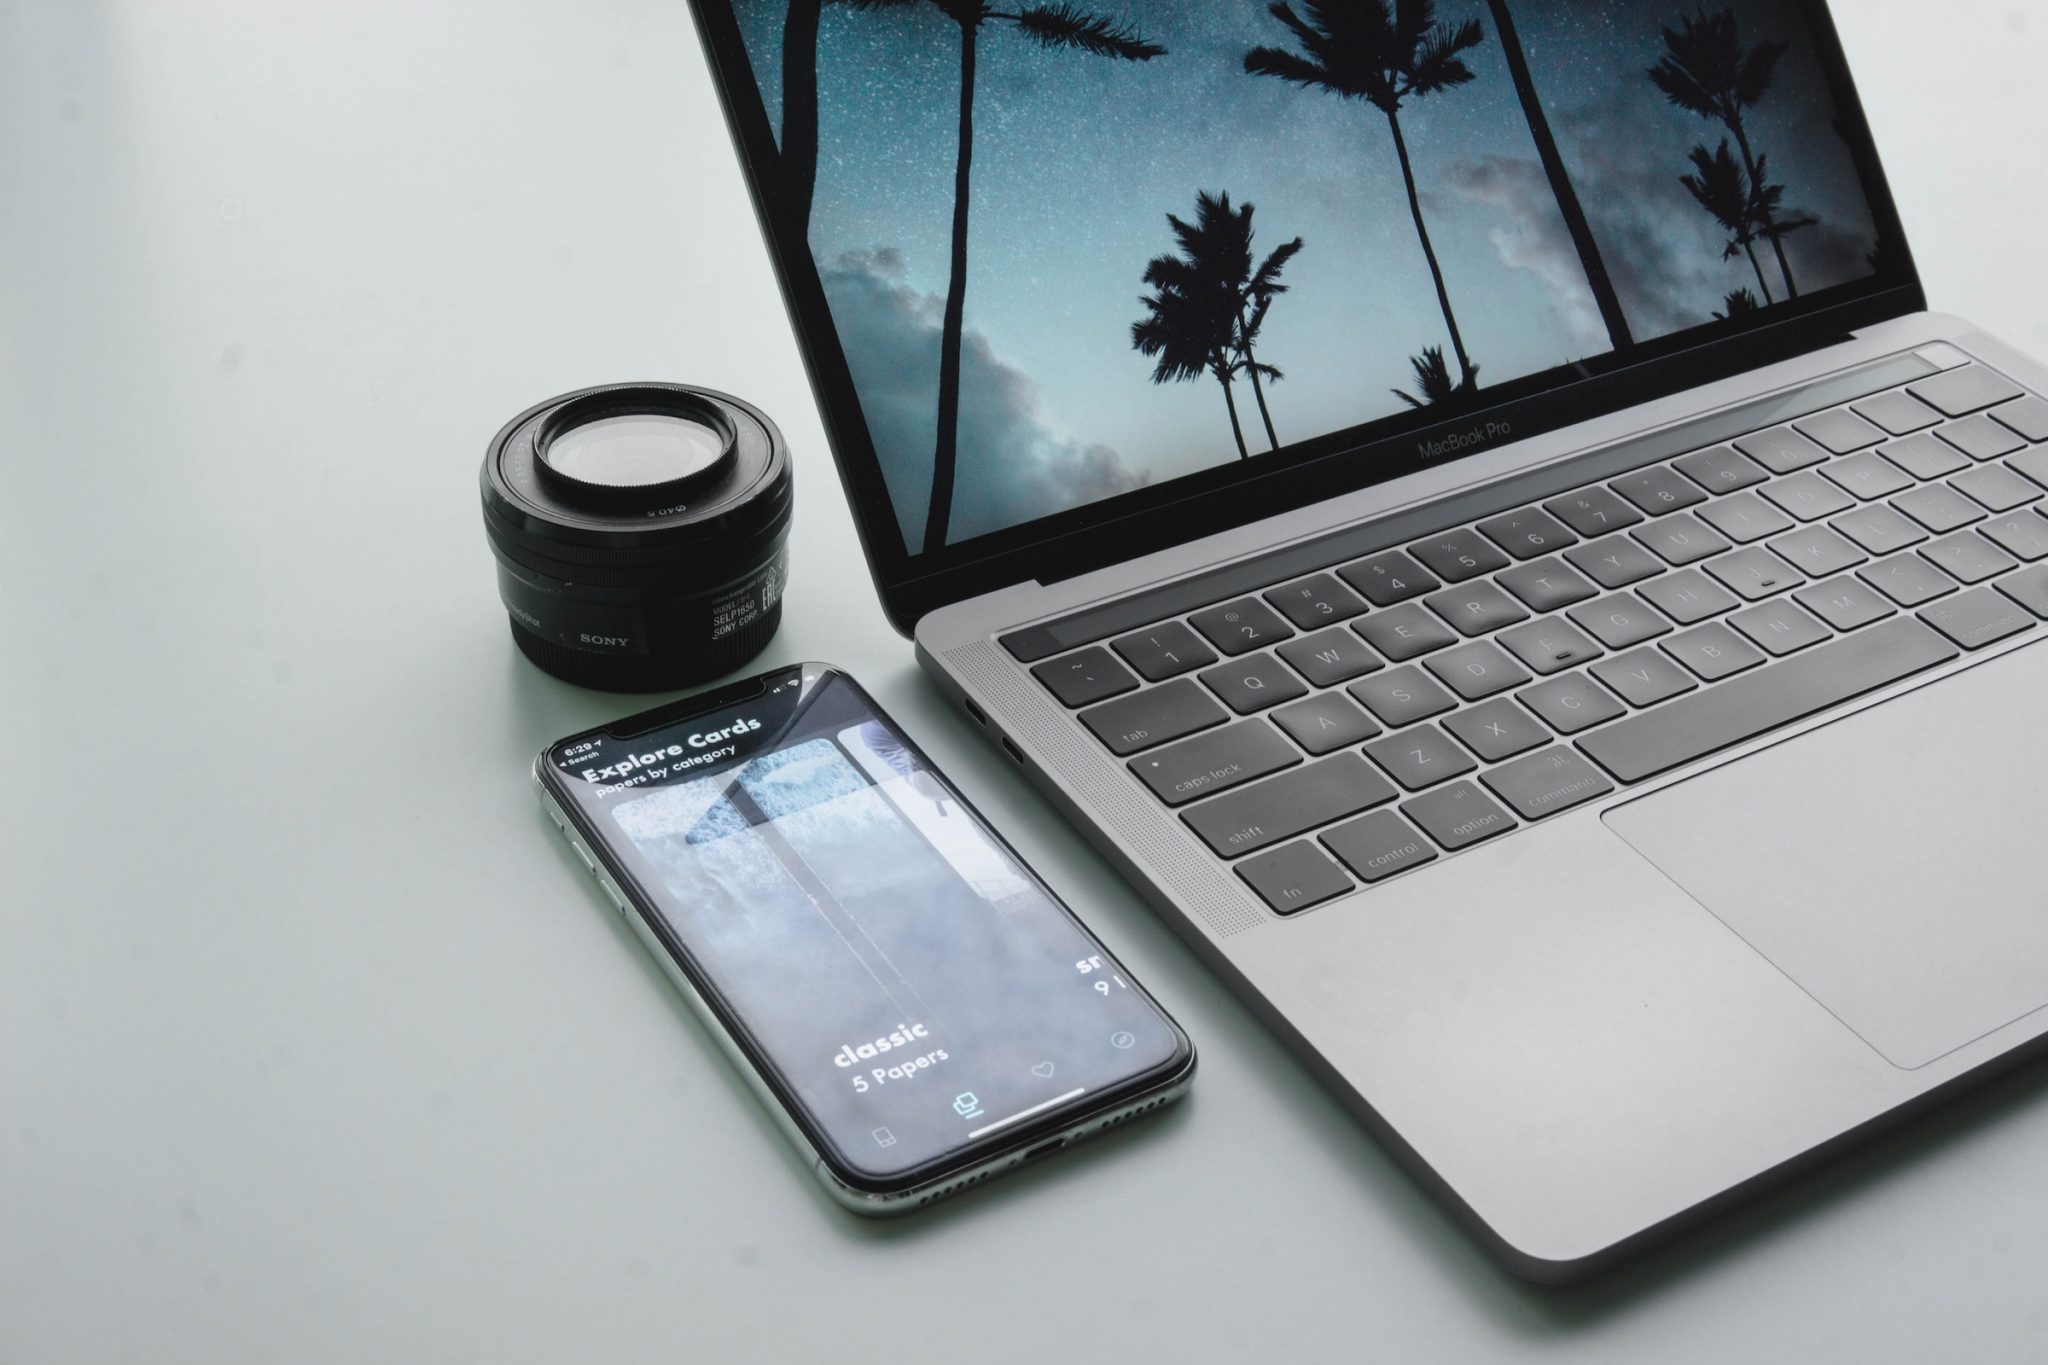 MacBook, smartphone, and camera lens